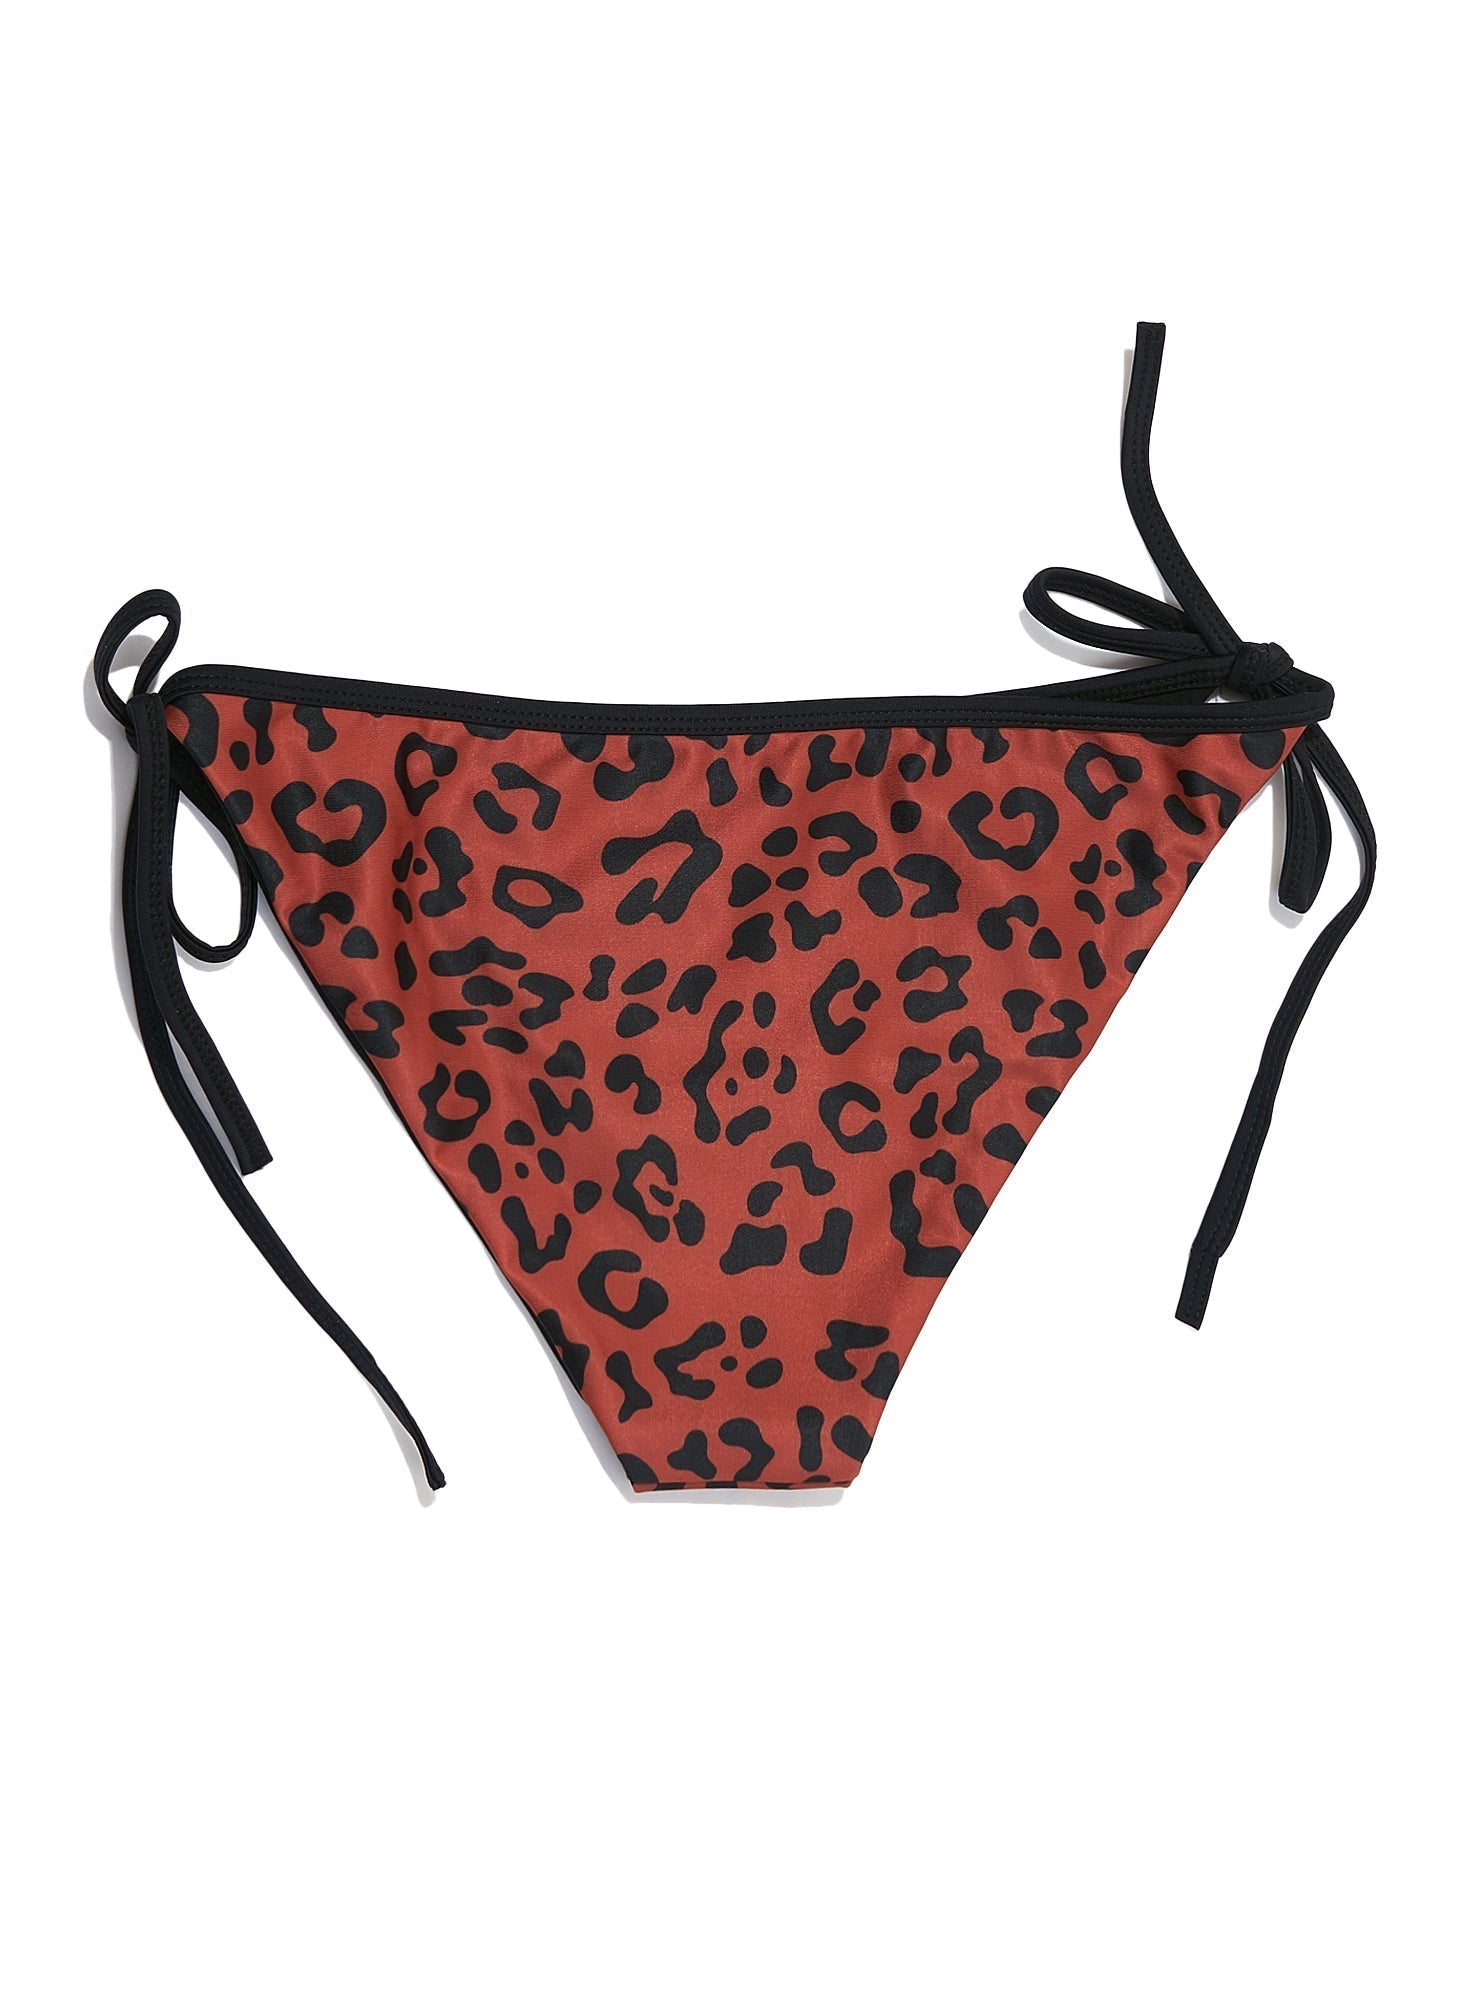 Savannah Black/Leopard Print Reversible Bikini Bottom-Yindi & Salt-stride